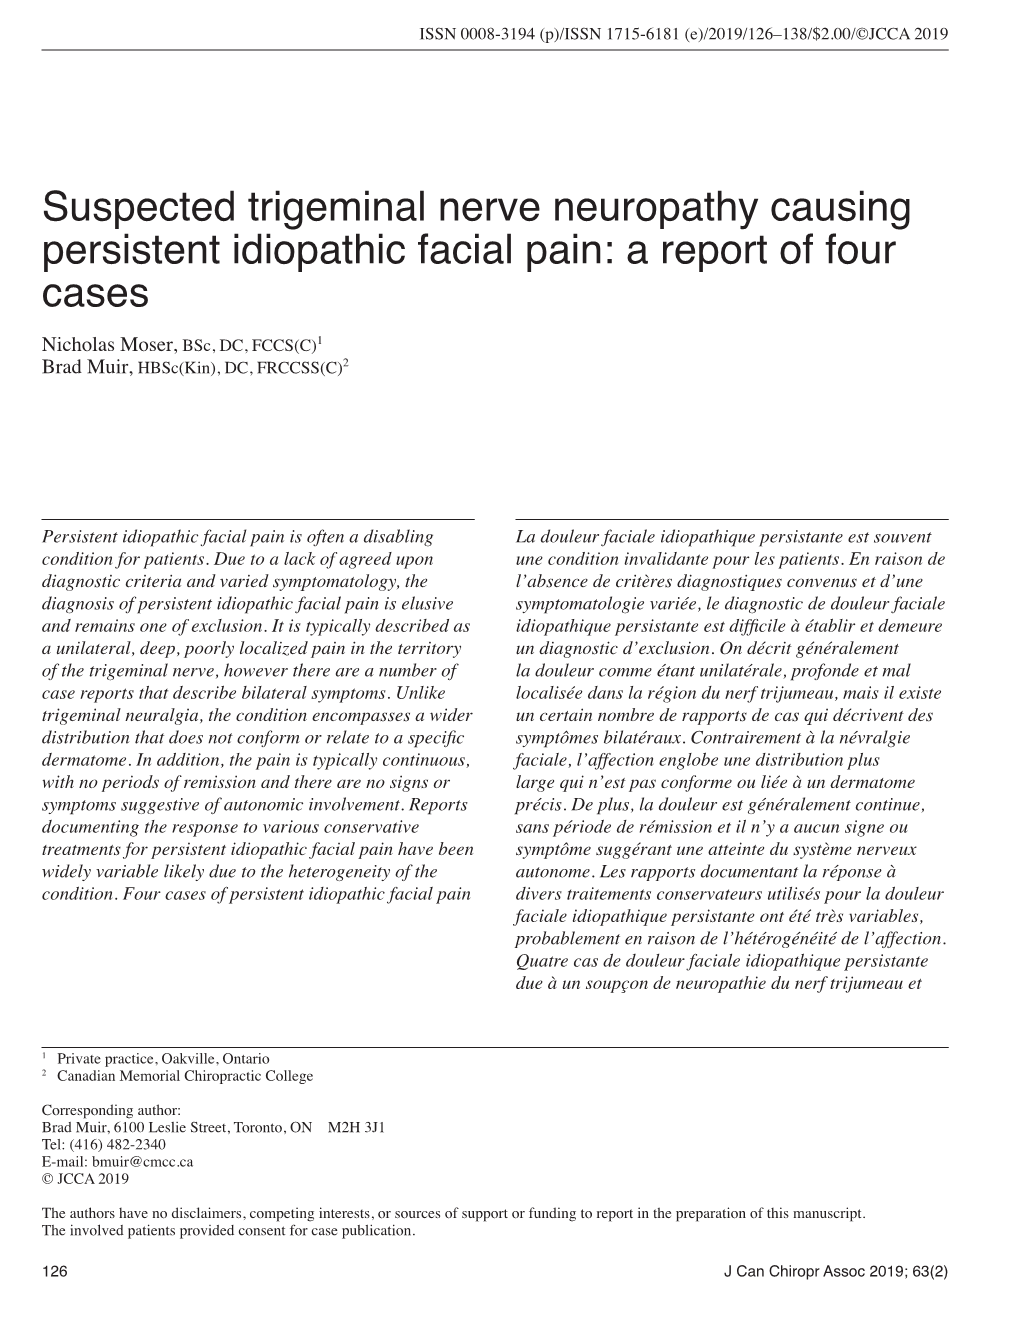 Suspected Trigeminal Nerve Neuropathy Causing Persistent